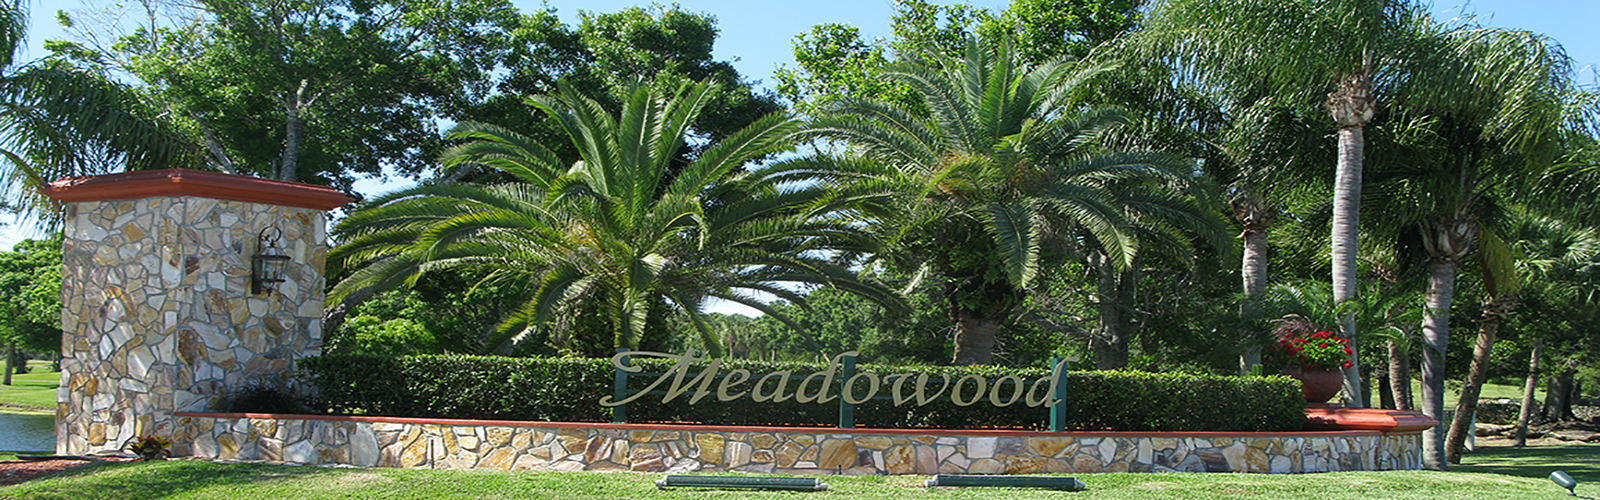 Meadowood Community Association Entrance Sign Carousel Image